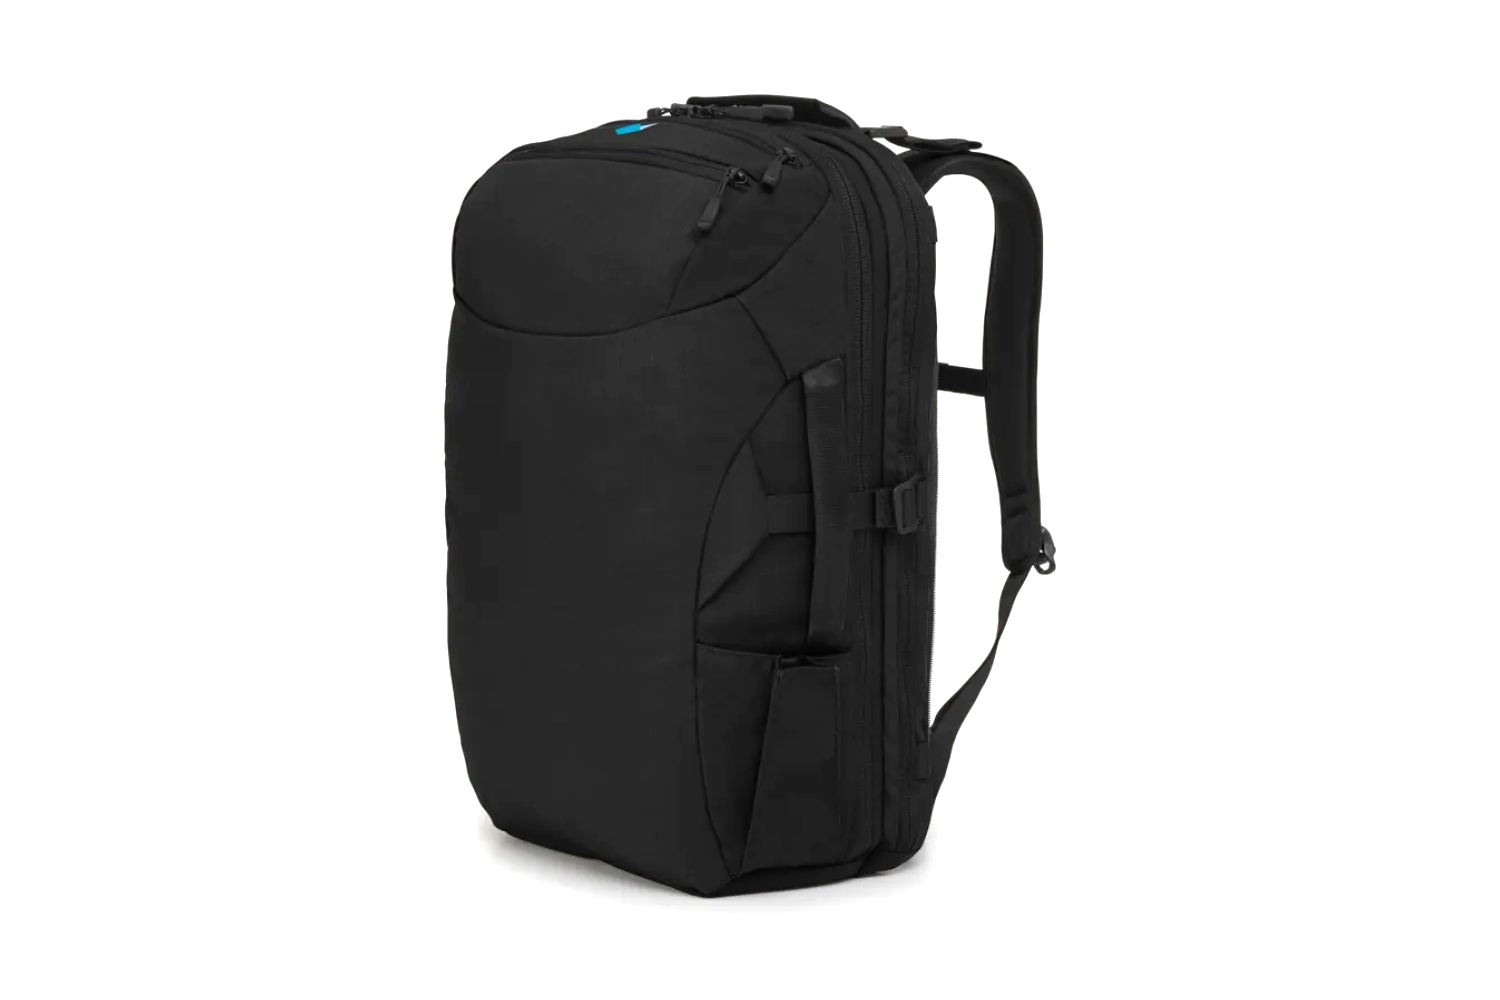 Tortuga Setout Laptop Backpack Review | Pack Hacker